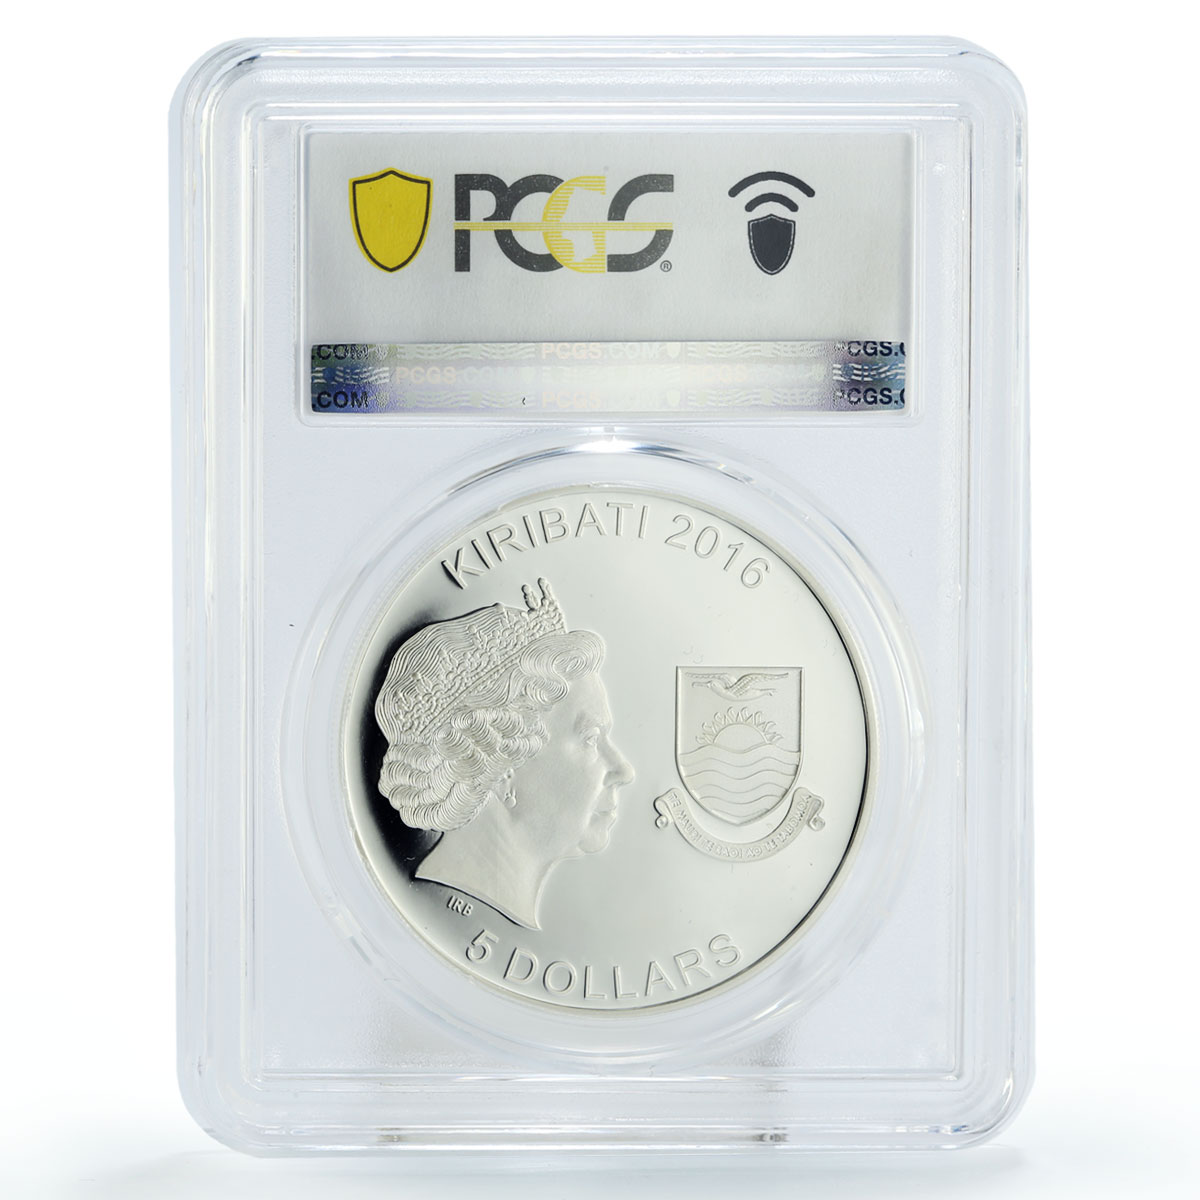 Kiribati 5 dollars Crypt Grim Reaper PR70 PCGS colored silver coin 2016